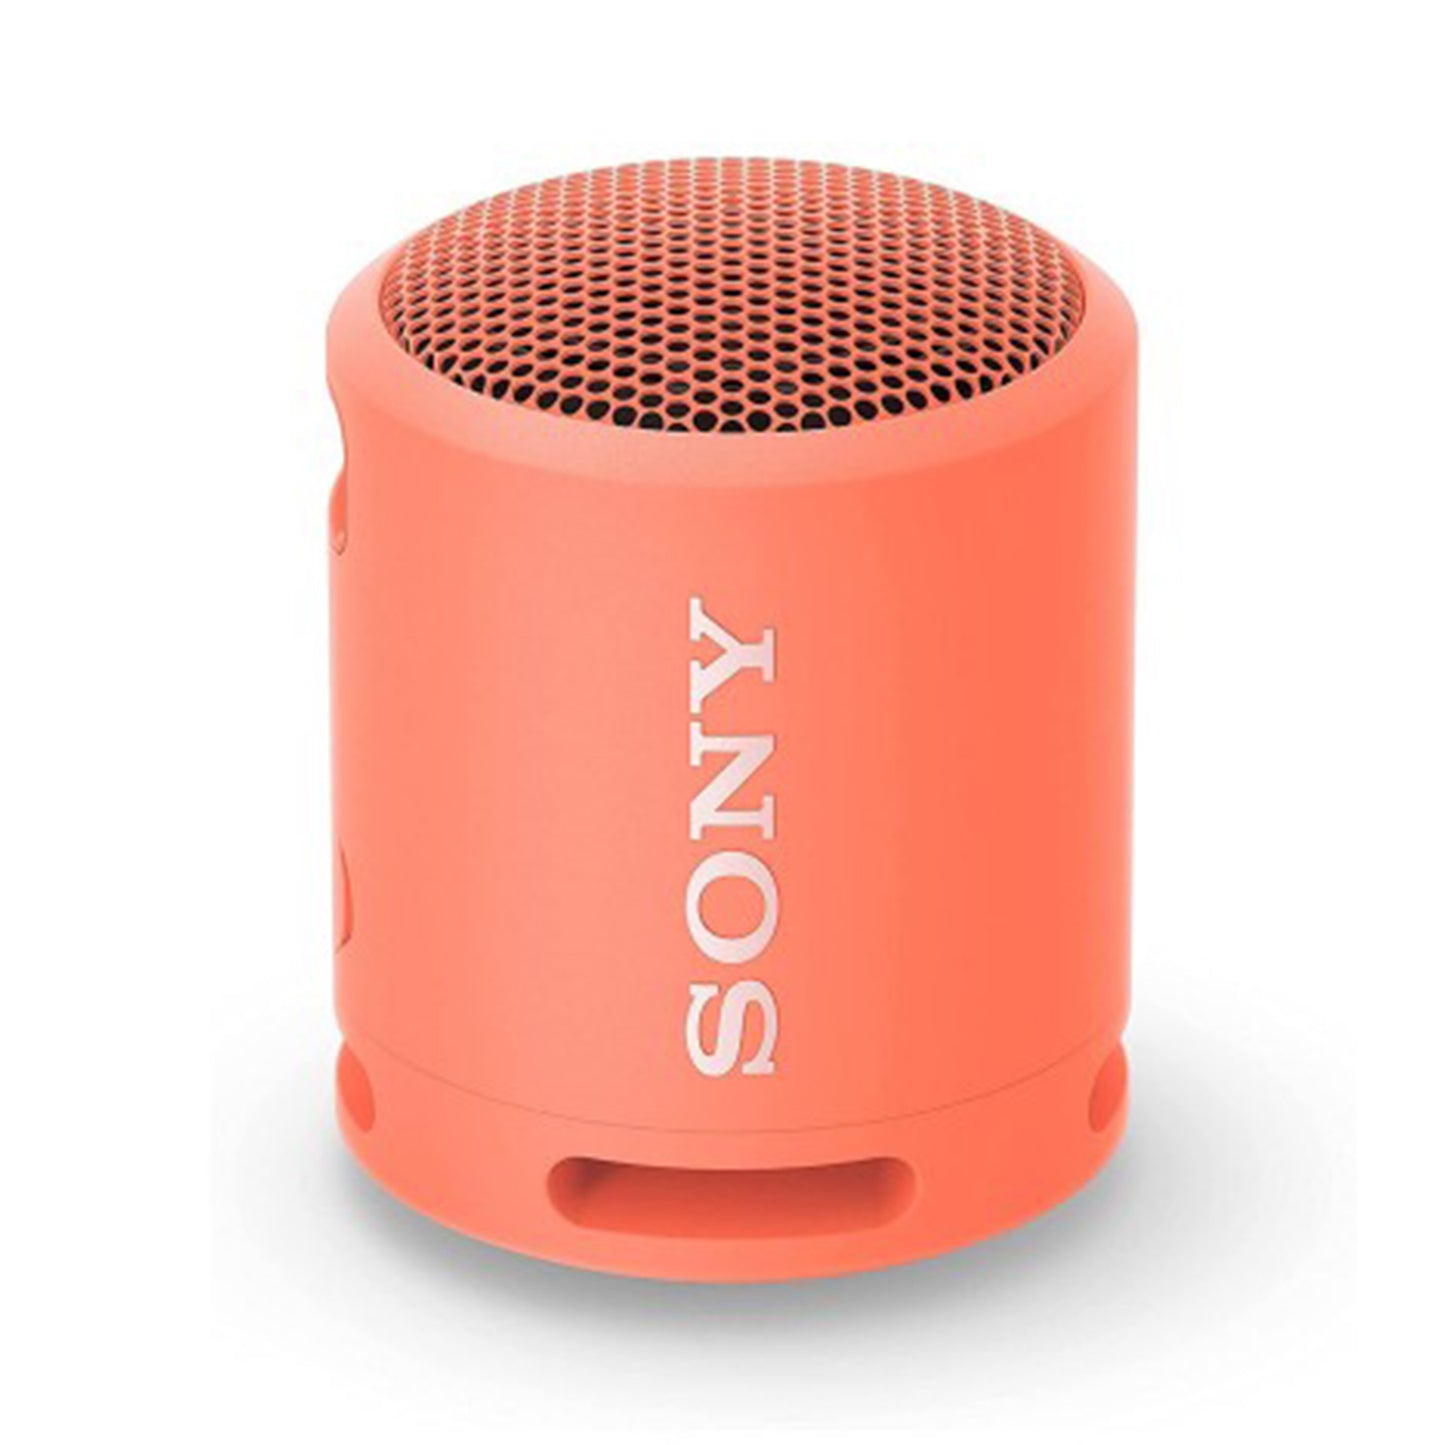 SONY XB13 Extra Bass Portable Bluetooth Speaker - Pink